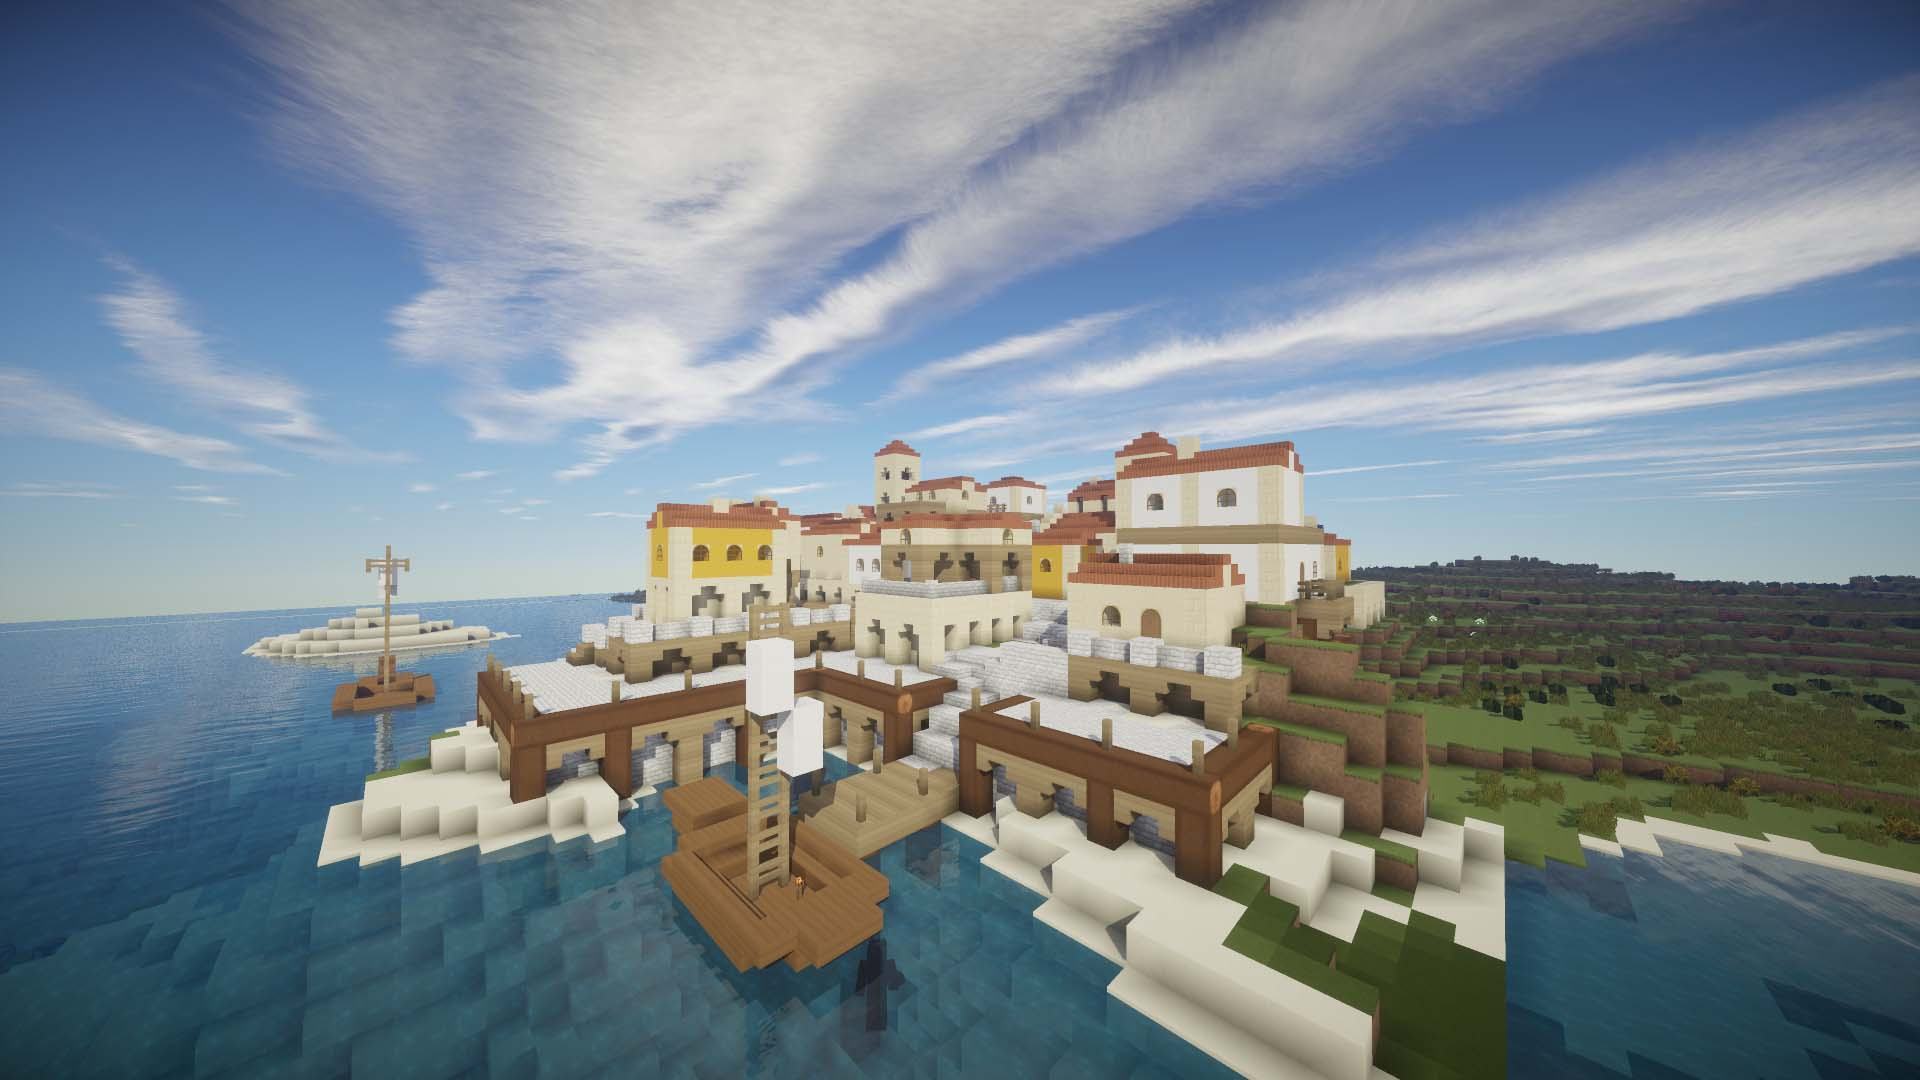 Hình ảnh Minecraft 3D đẹp mắt